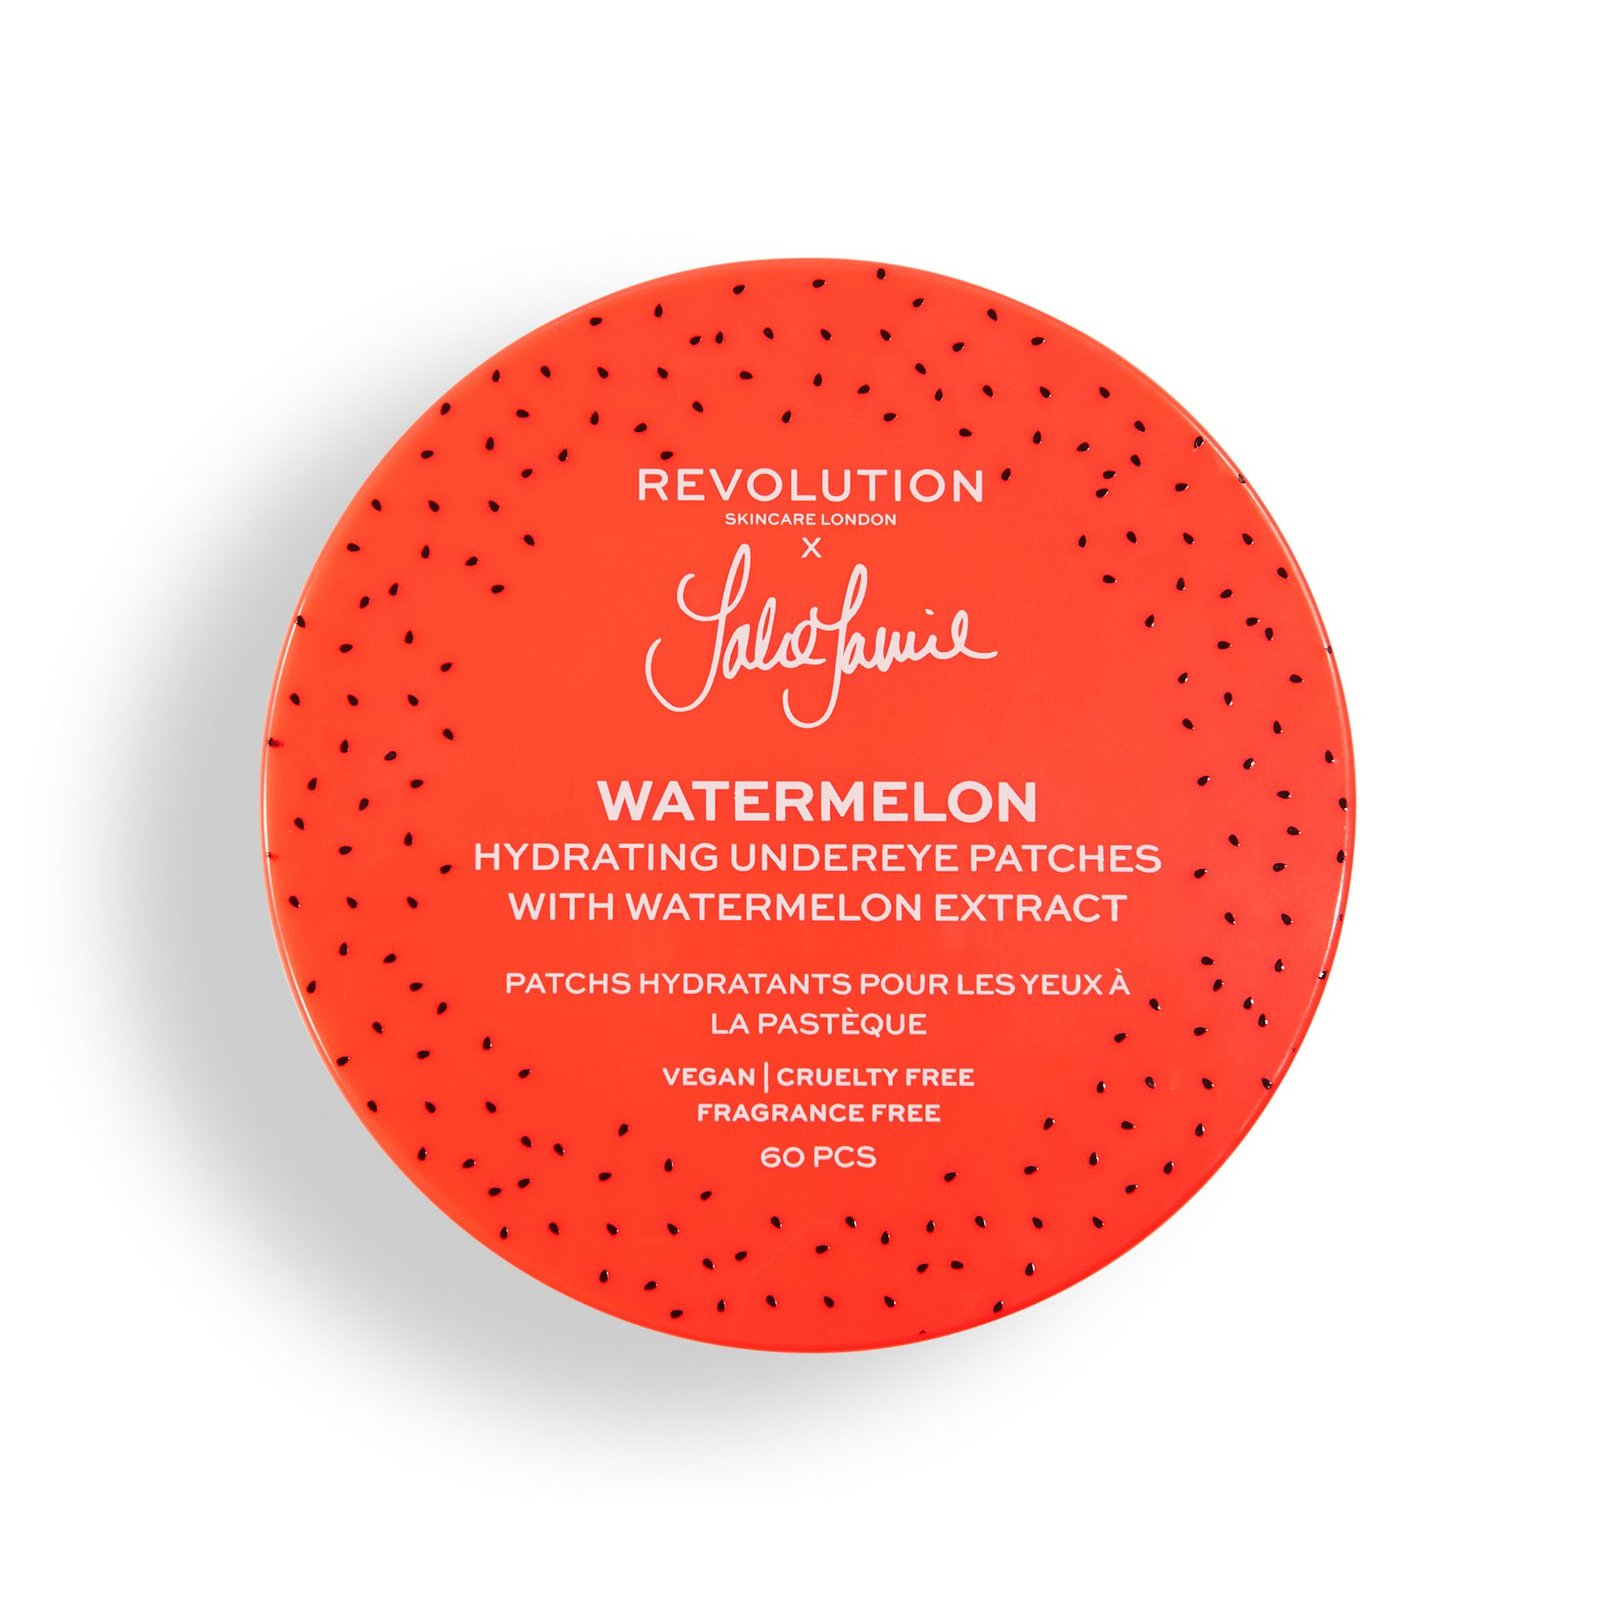 Revolution Skincare x Jake Jamie Watermelon Hydrating Undereye Patches 60 st